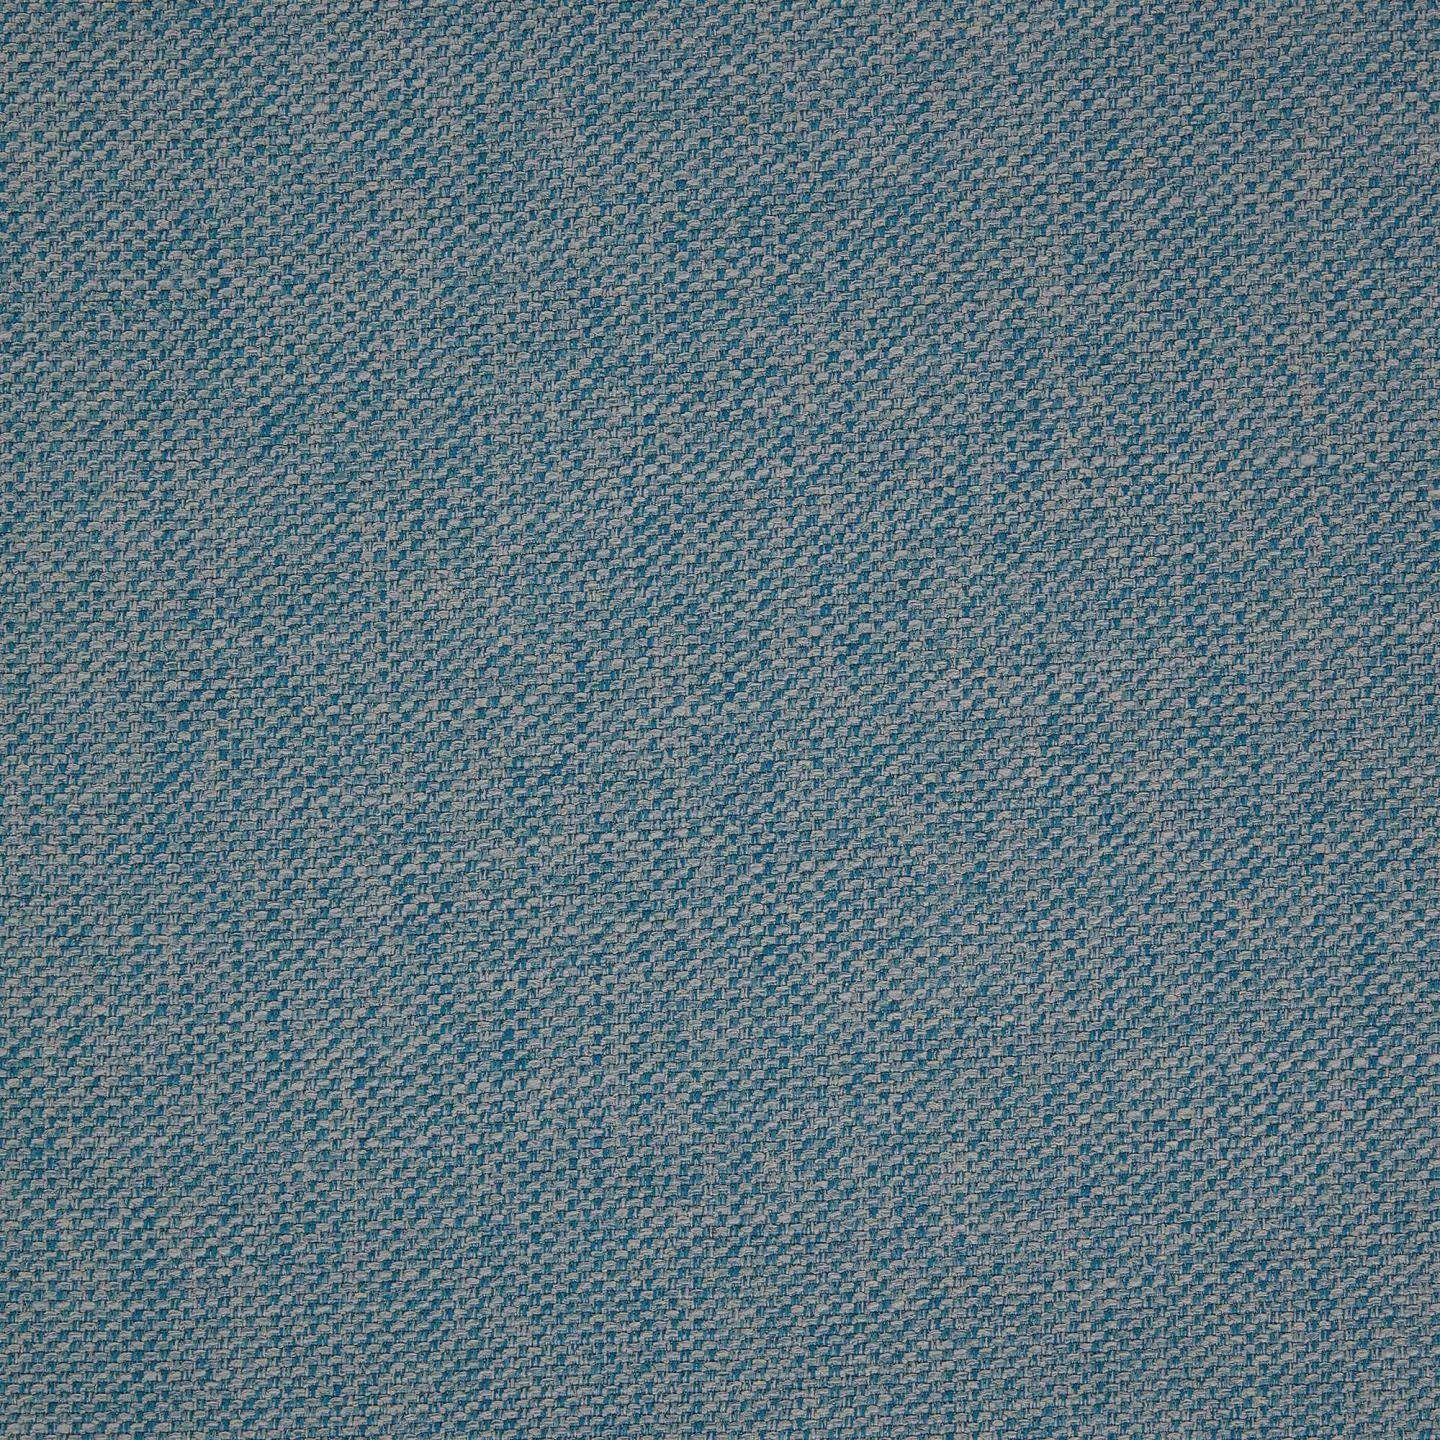 2er Konna x x 83 cm hellblau Natur24 59 Stühle 55 Set Esszimmerstuhl